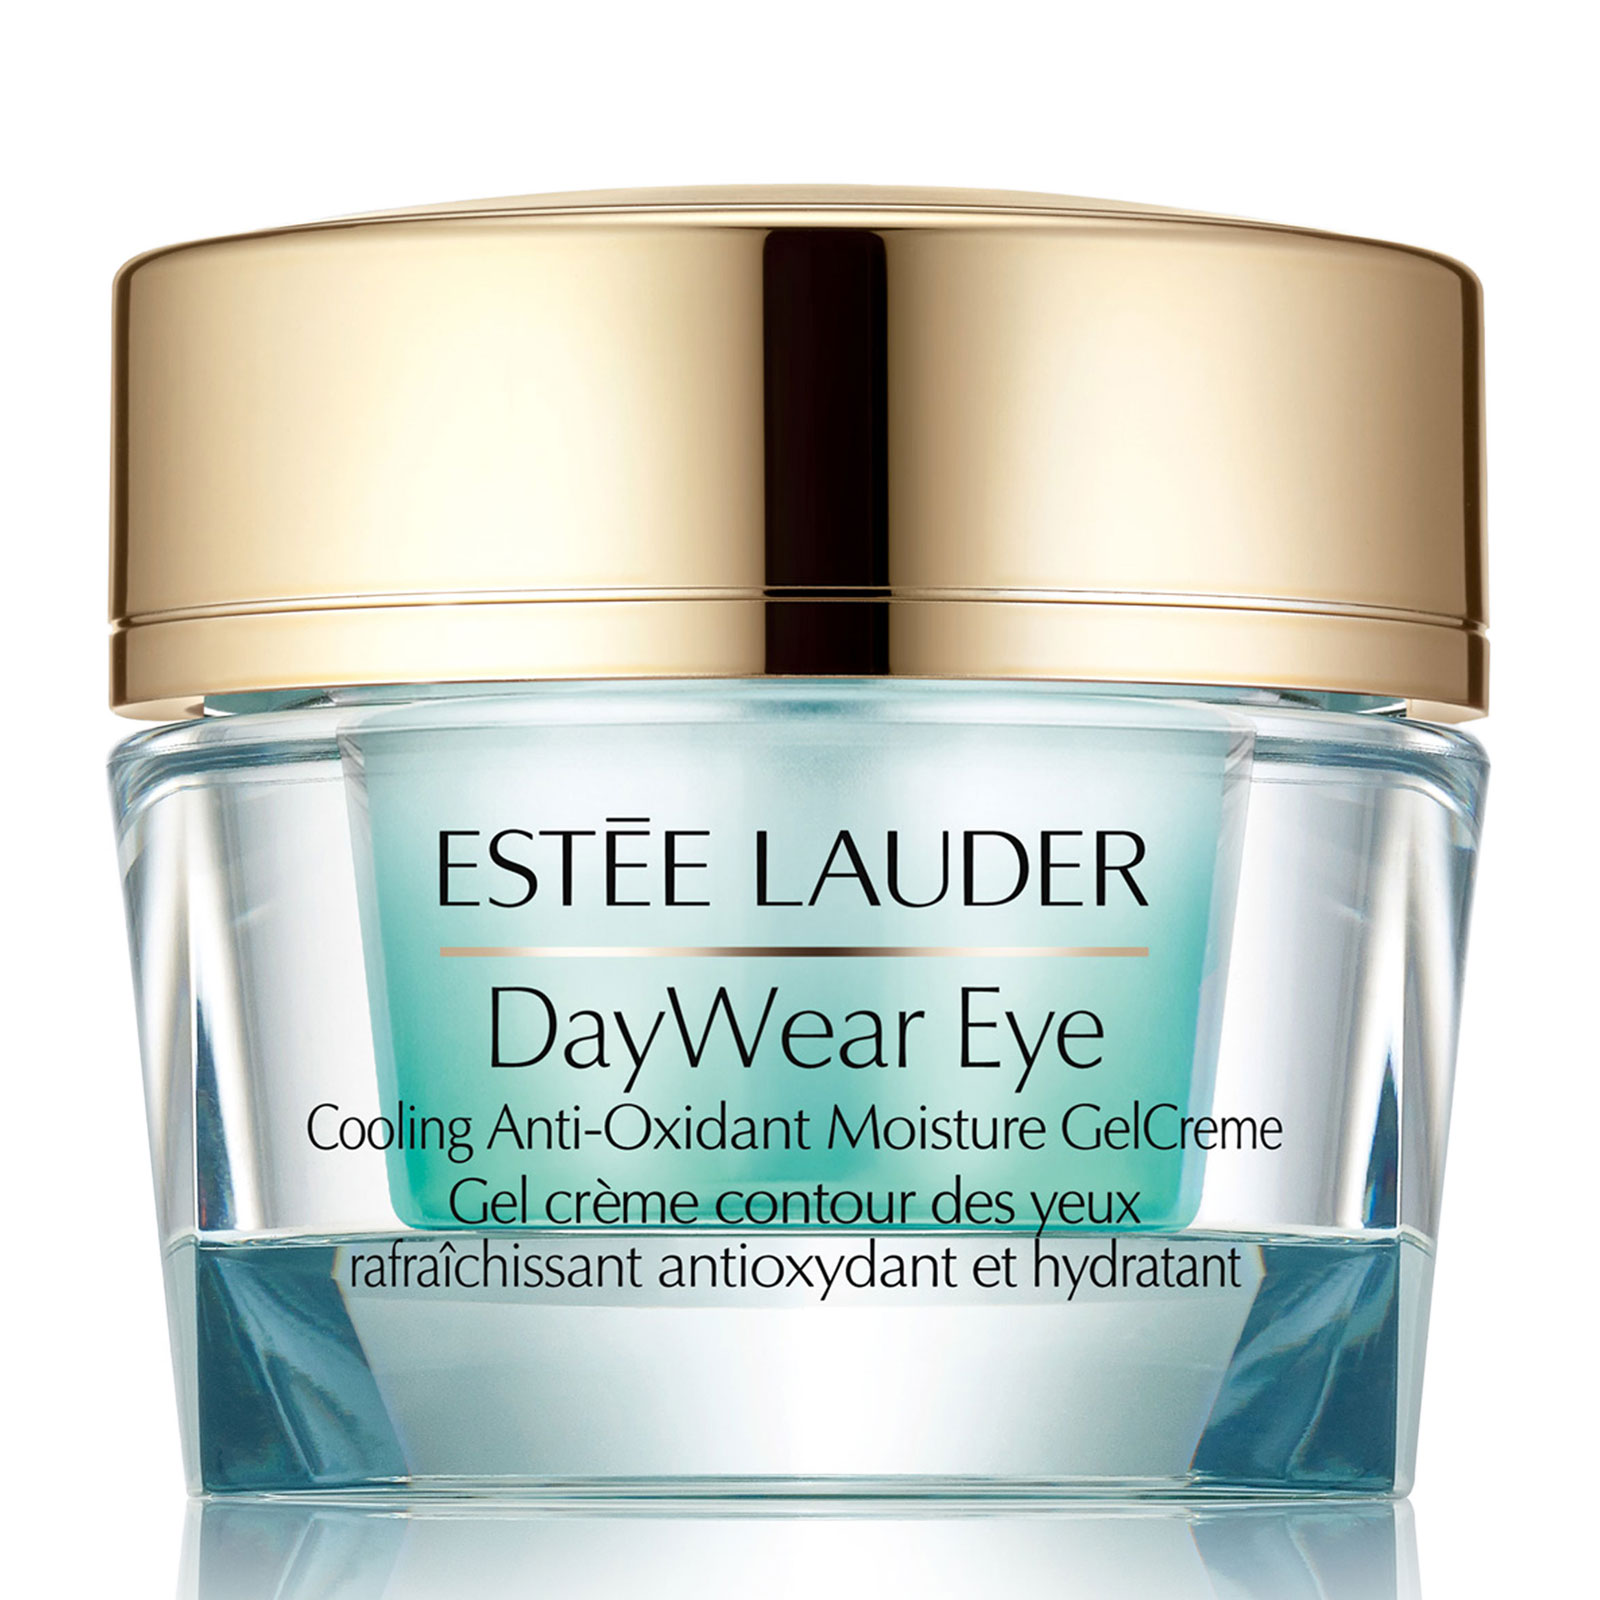 Estee Lauder Daywear Eye Cooling Anti-Oxidant Moisture Gelcreme 15Ml